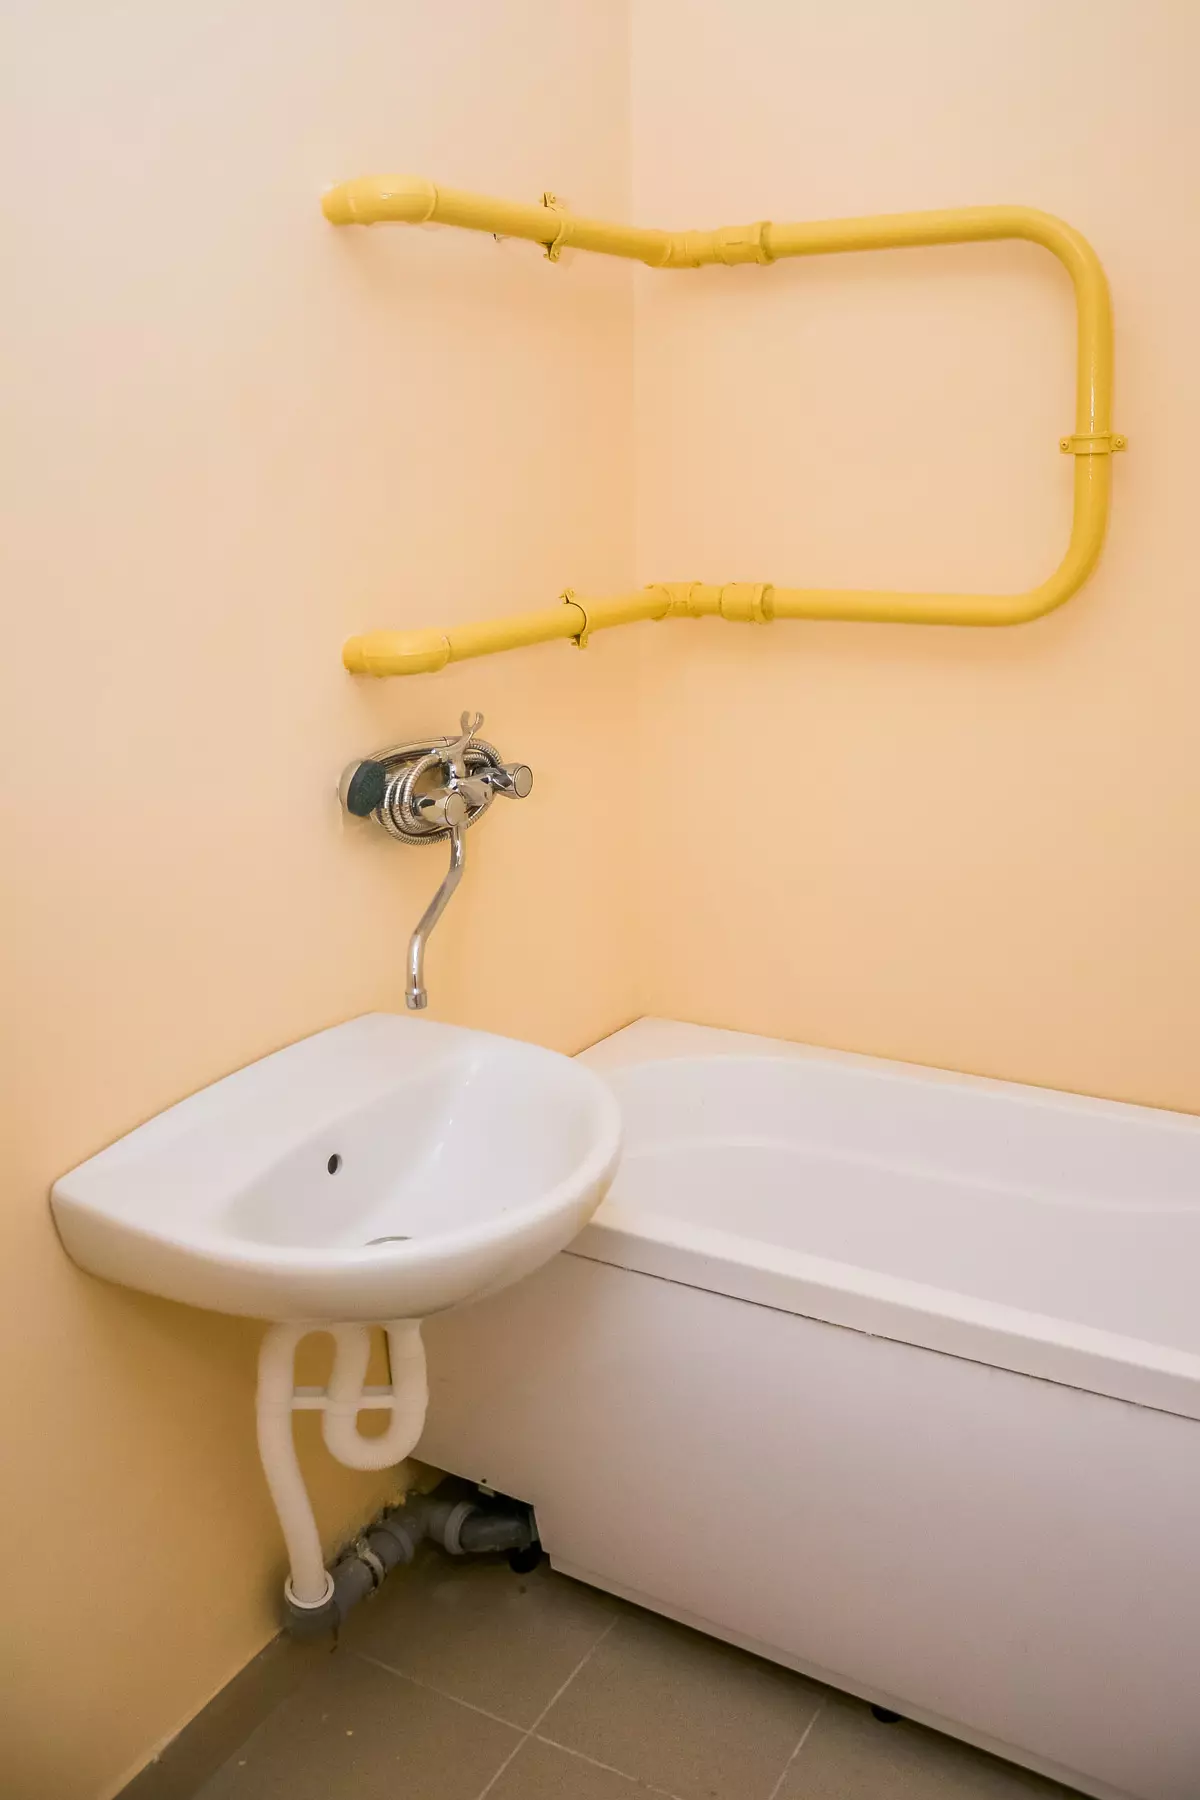 7 original ways to hide pipes in the bathroom